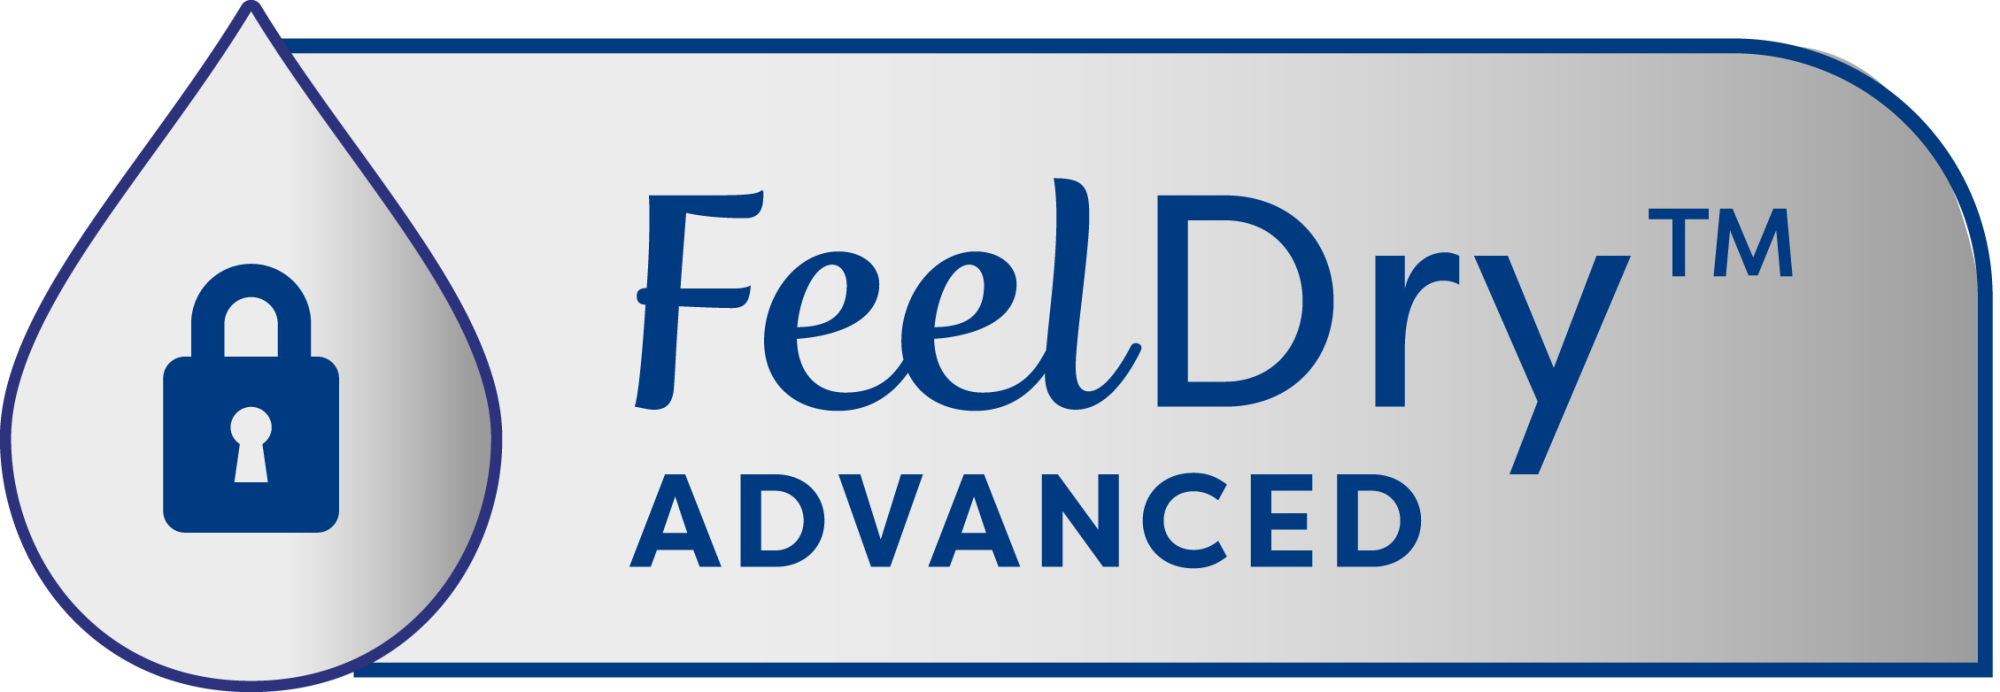 TENA ProSkin inkontinensprodukter absorberer hurtigt væsken med FeelDry Advanced™